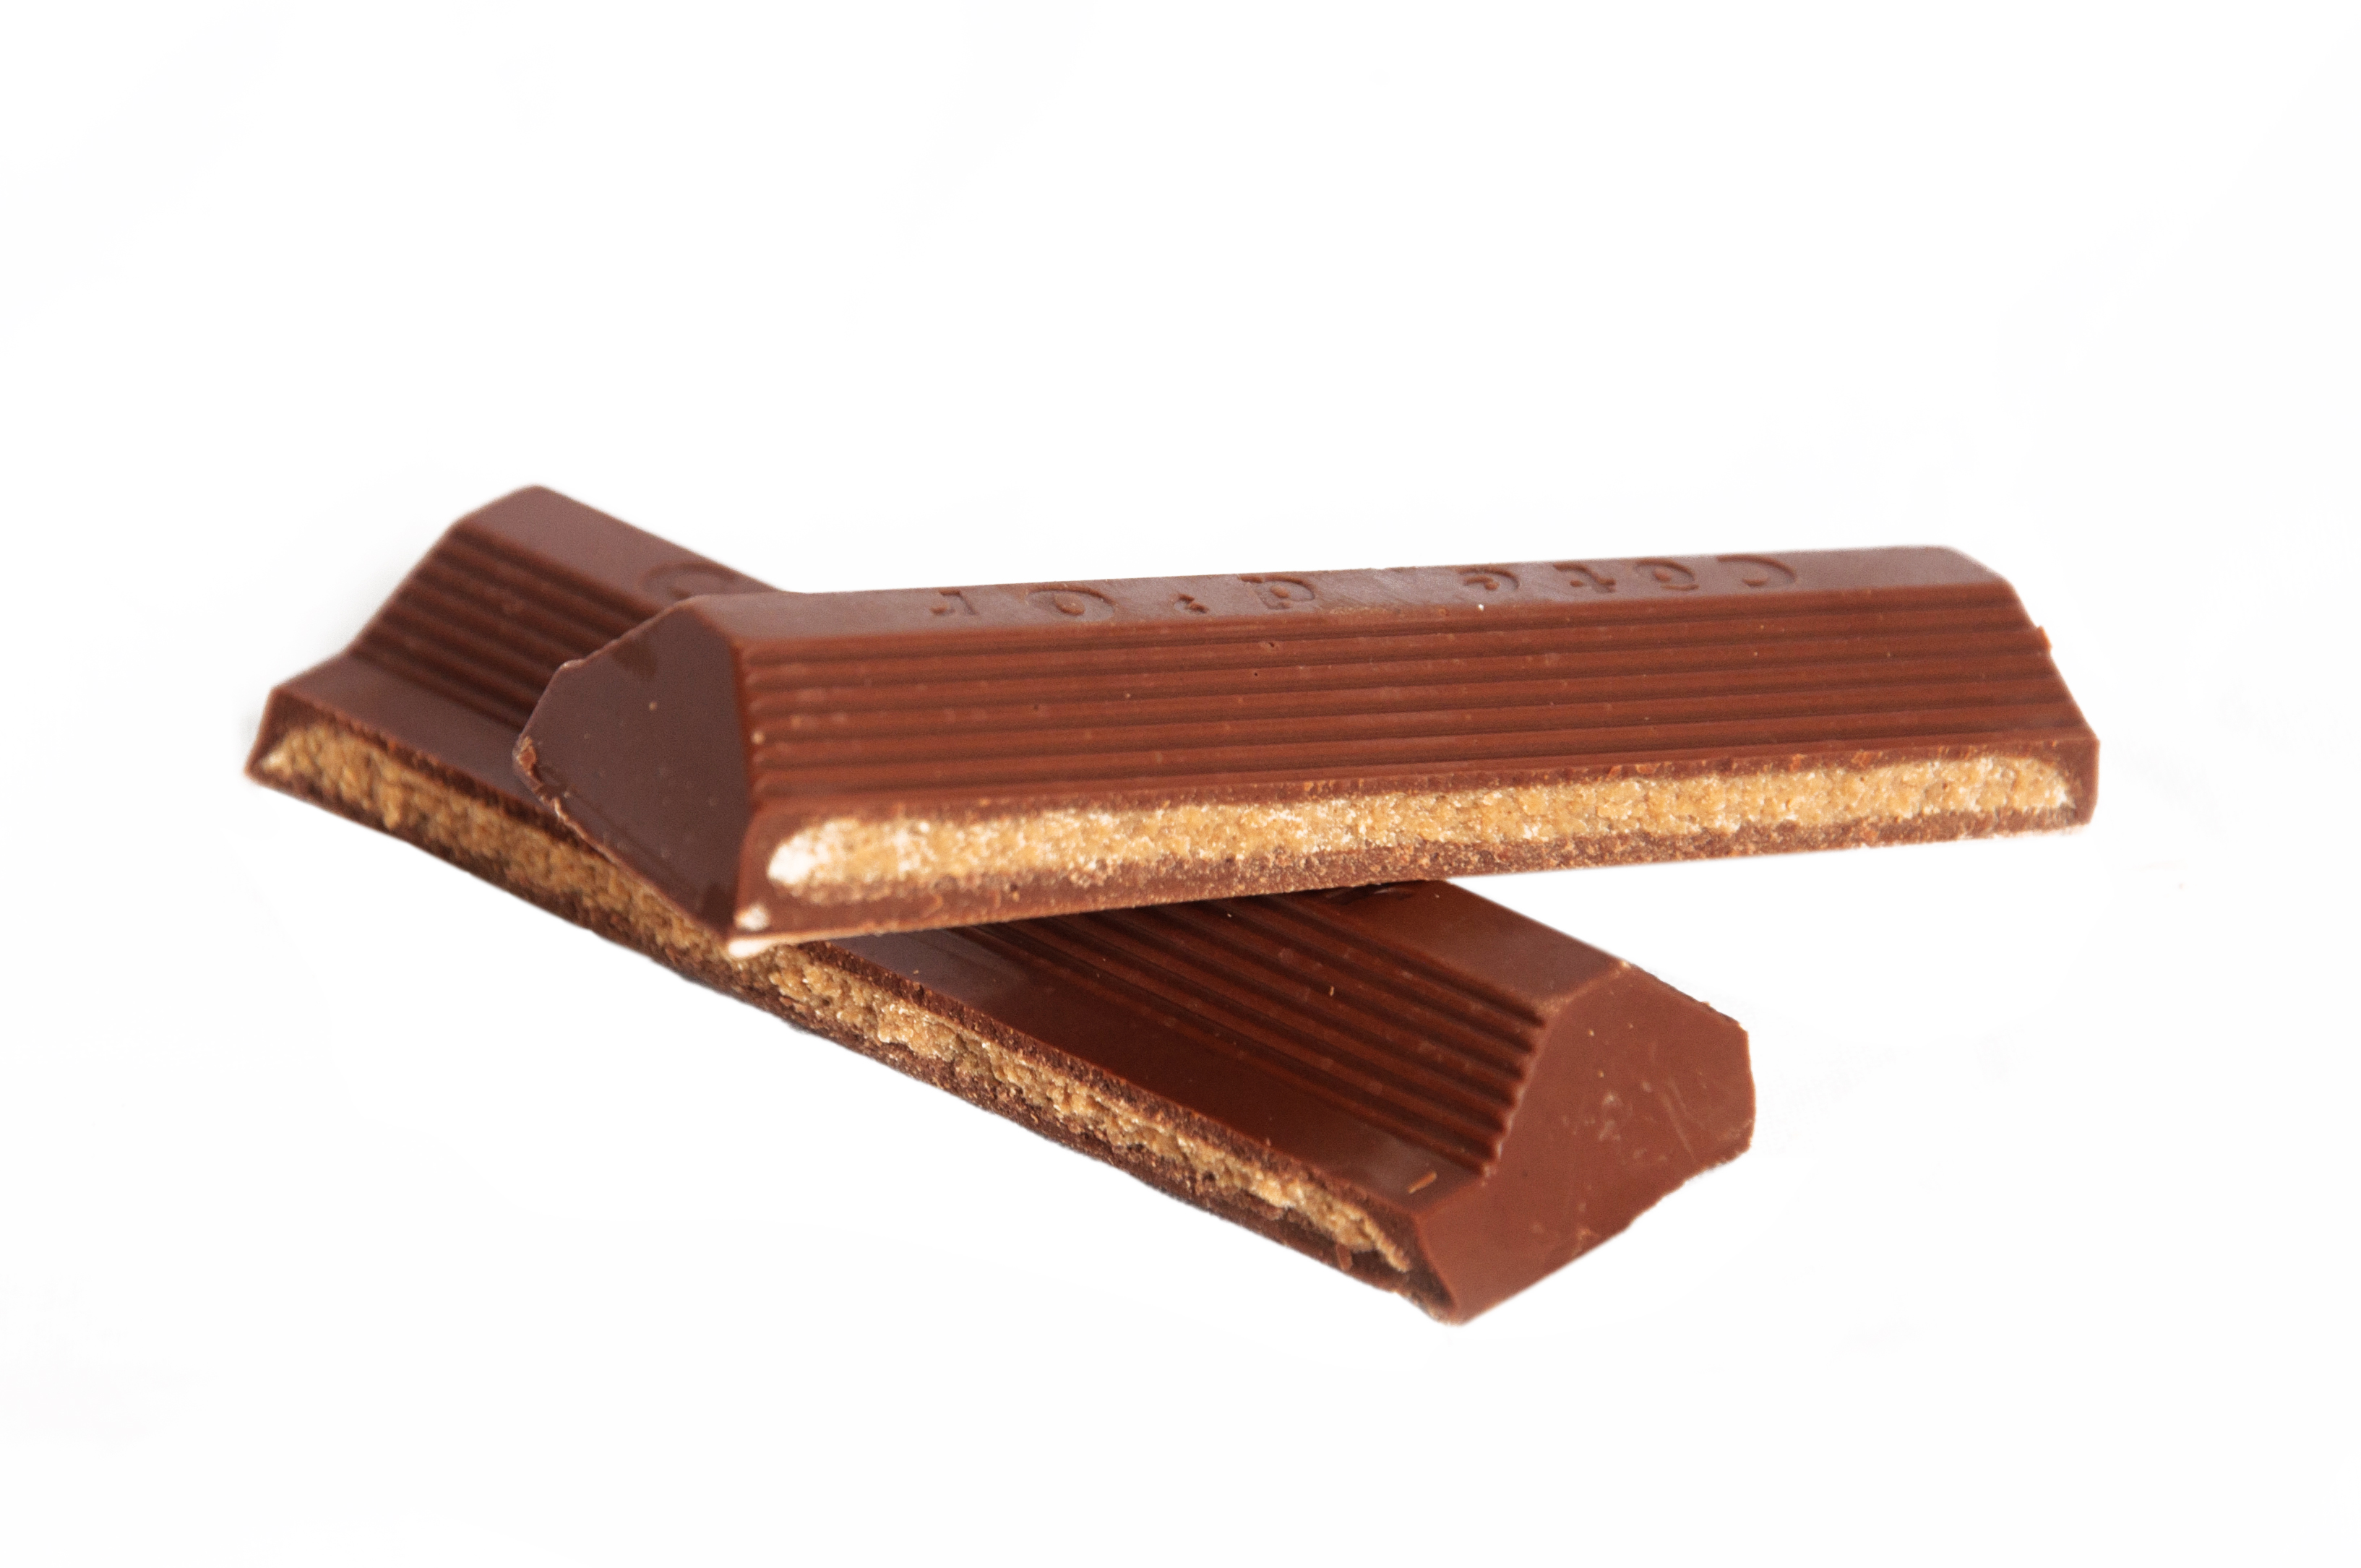 Chocolate bars photo